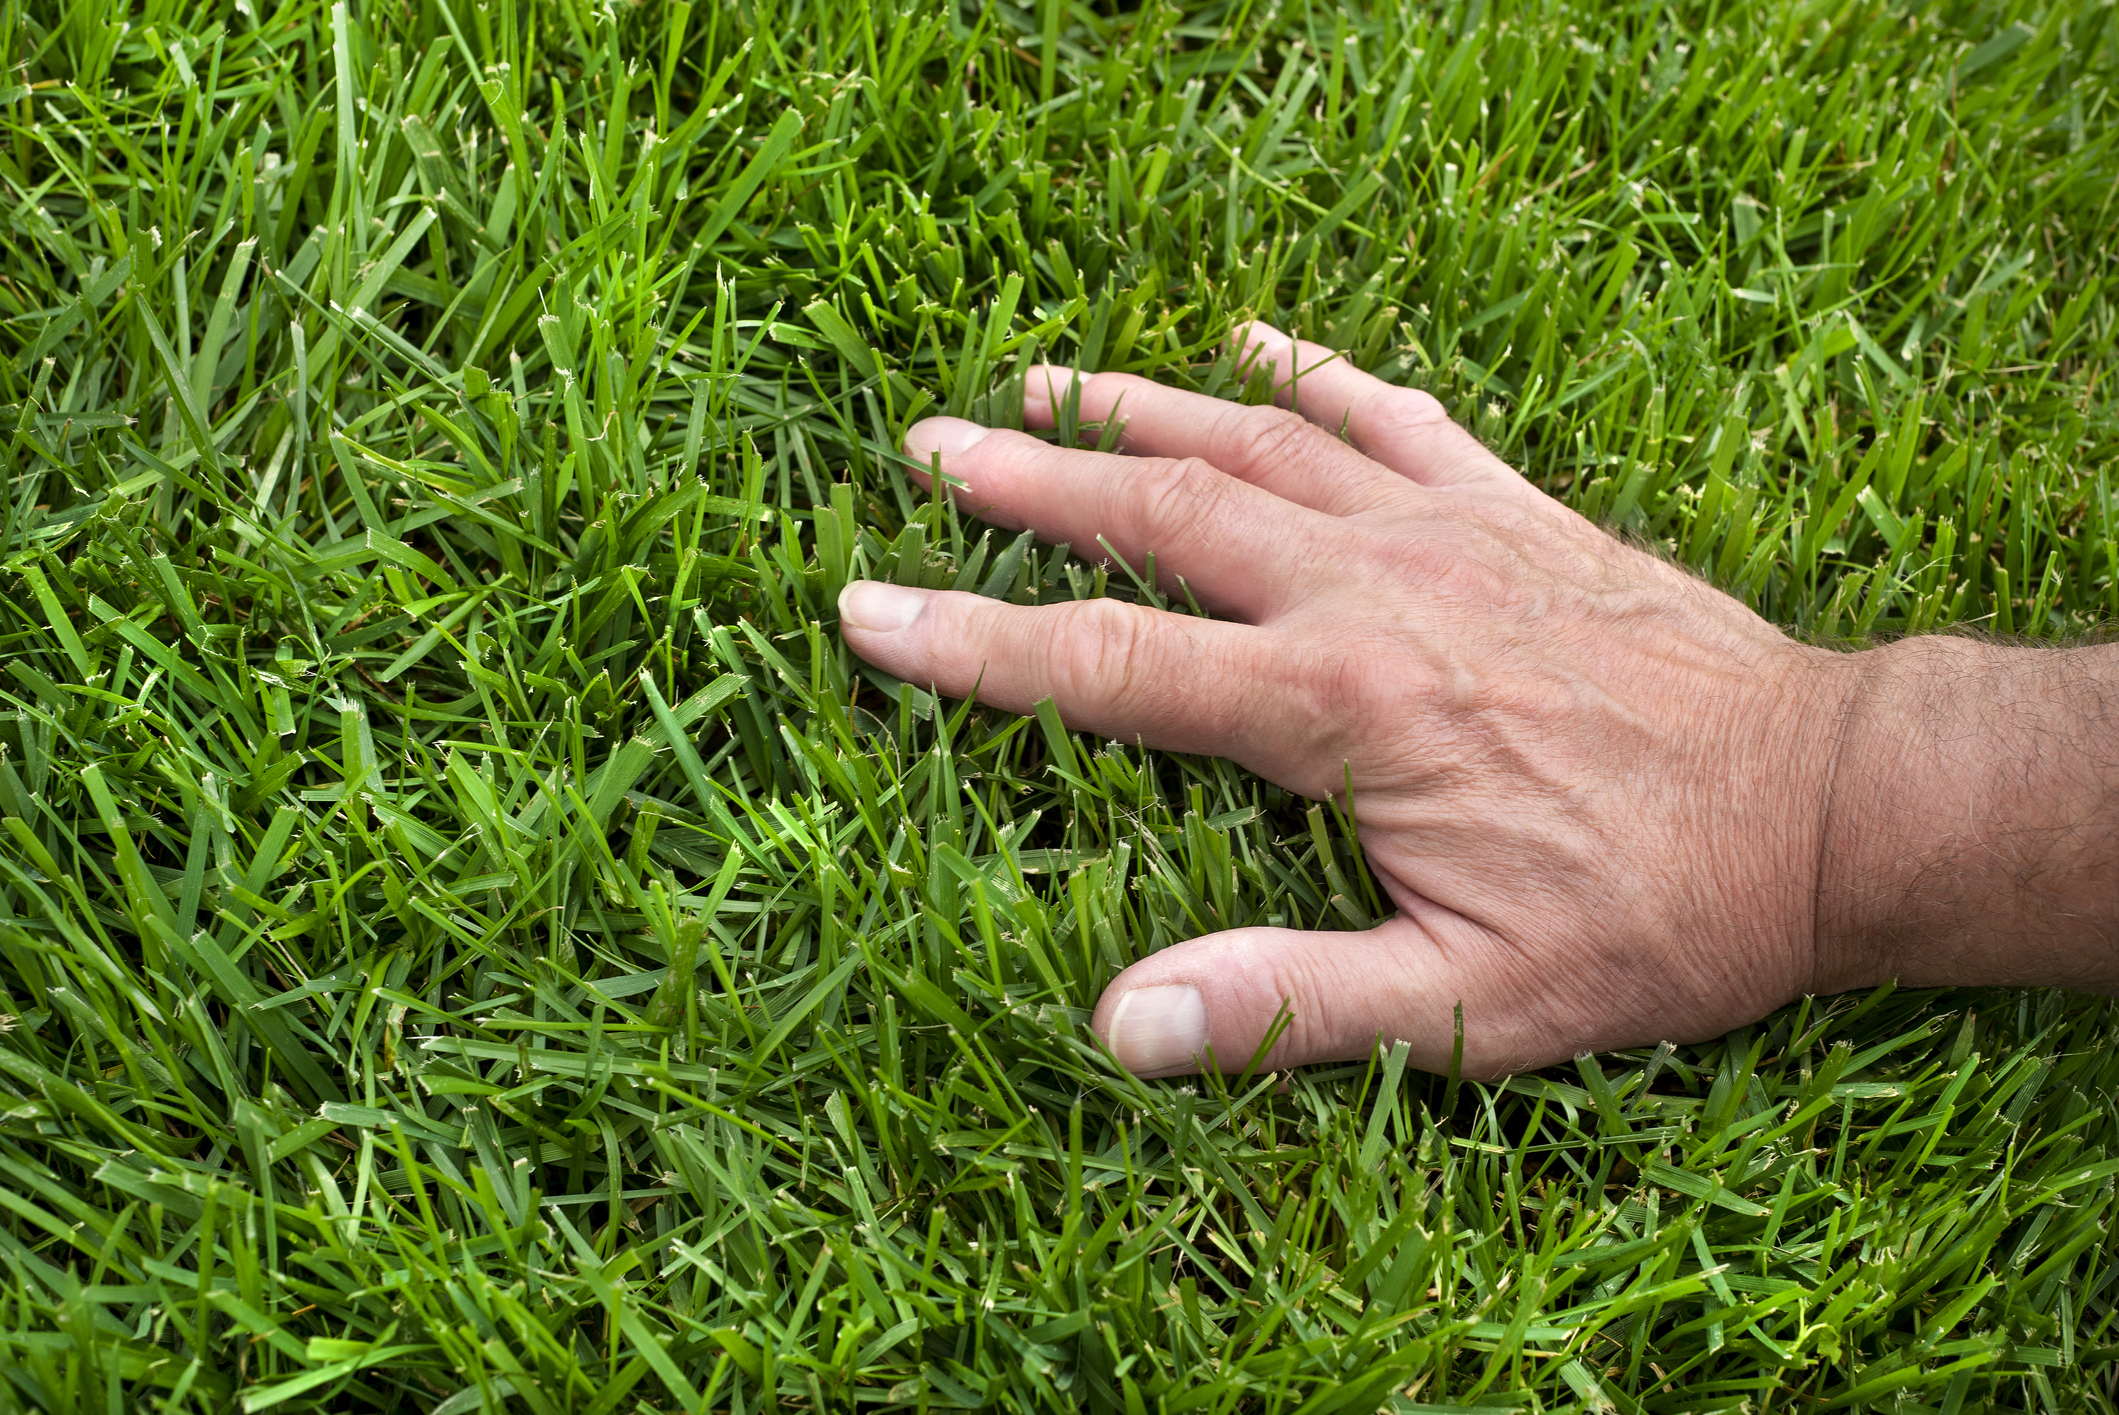 Hand running through blades of grass